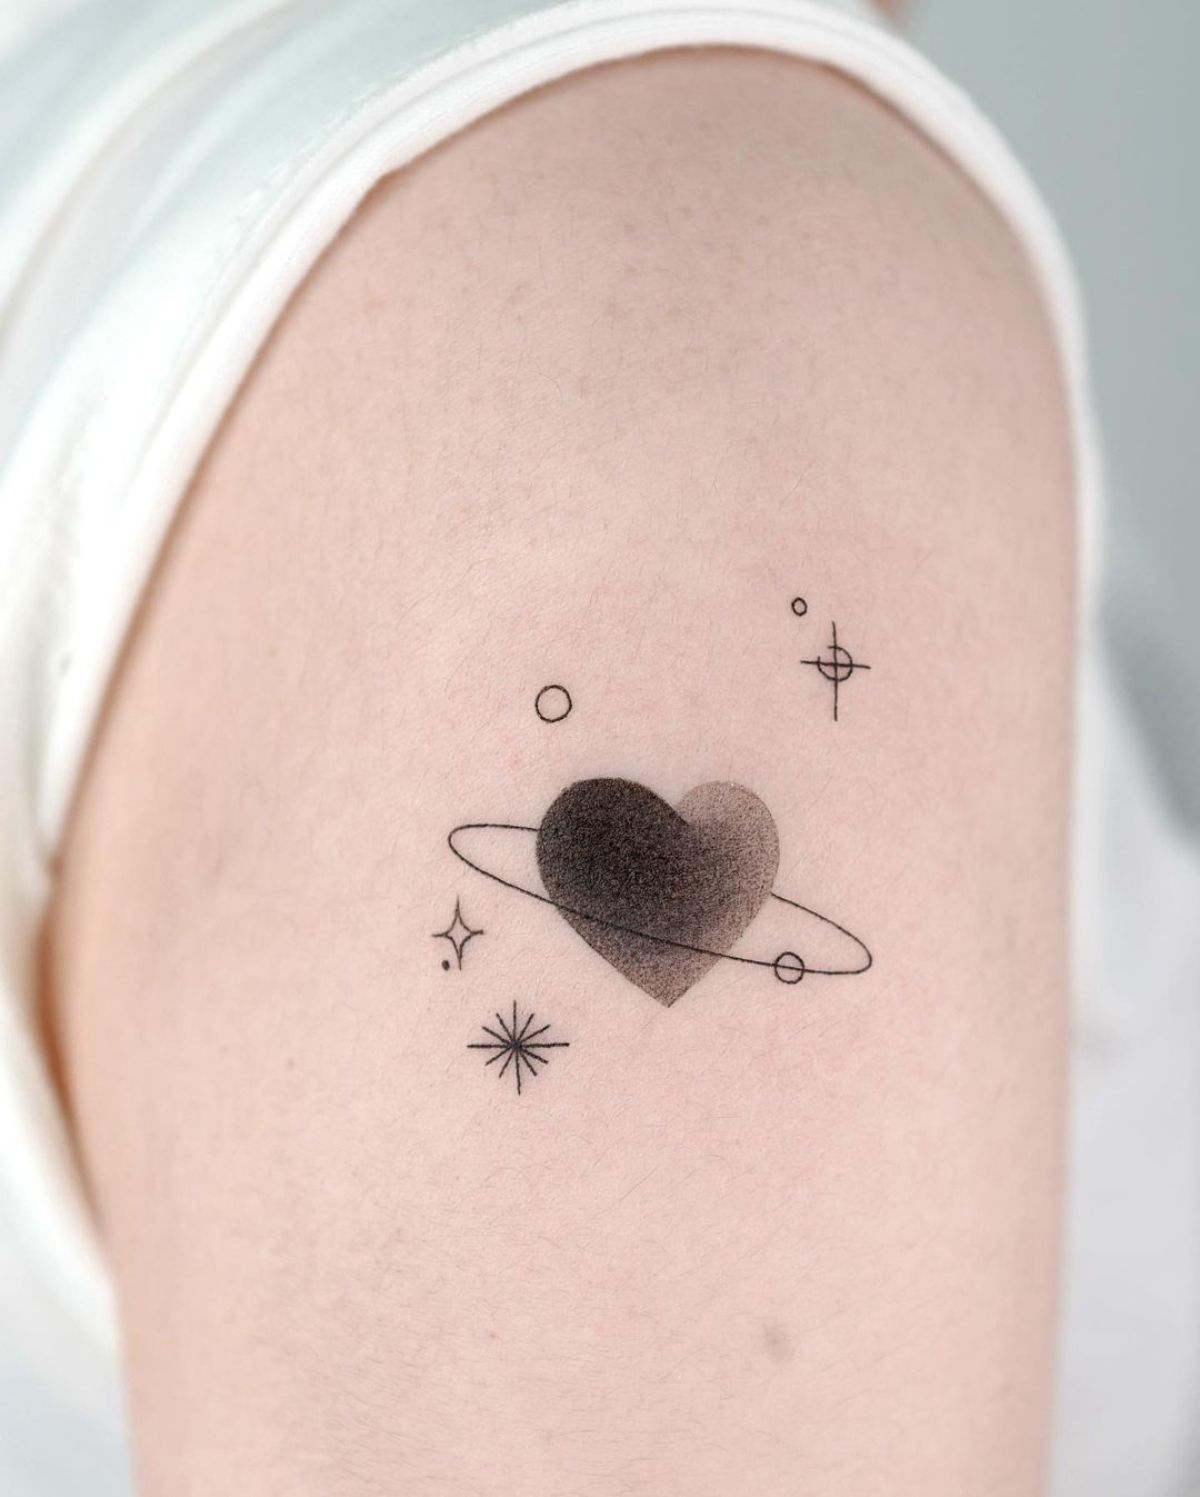 30 Tiny Tattoo Ideas for Major Inspiration  Planet tattoos Sharpie tattoos  Tiny tattoos